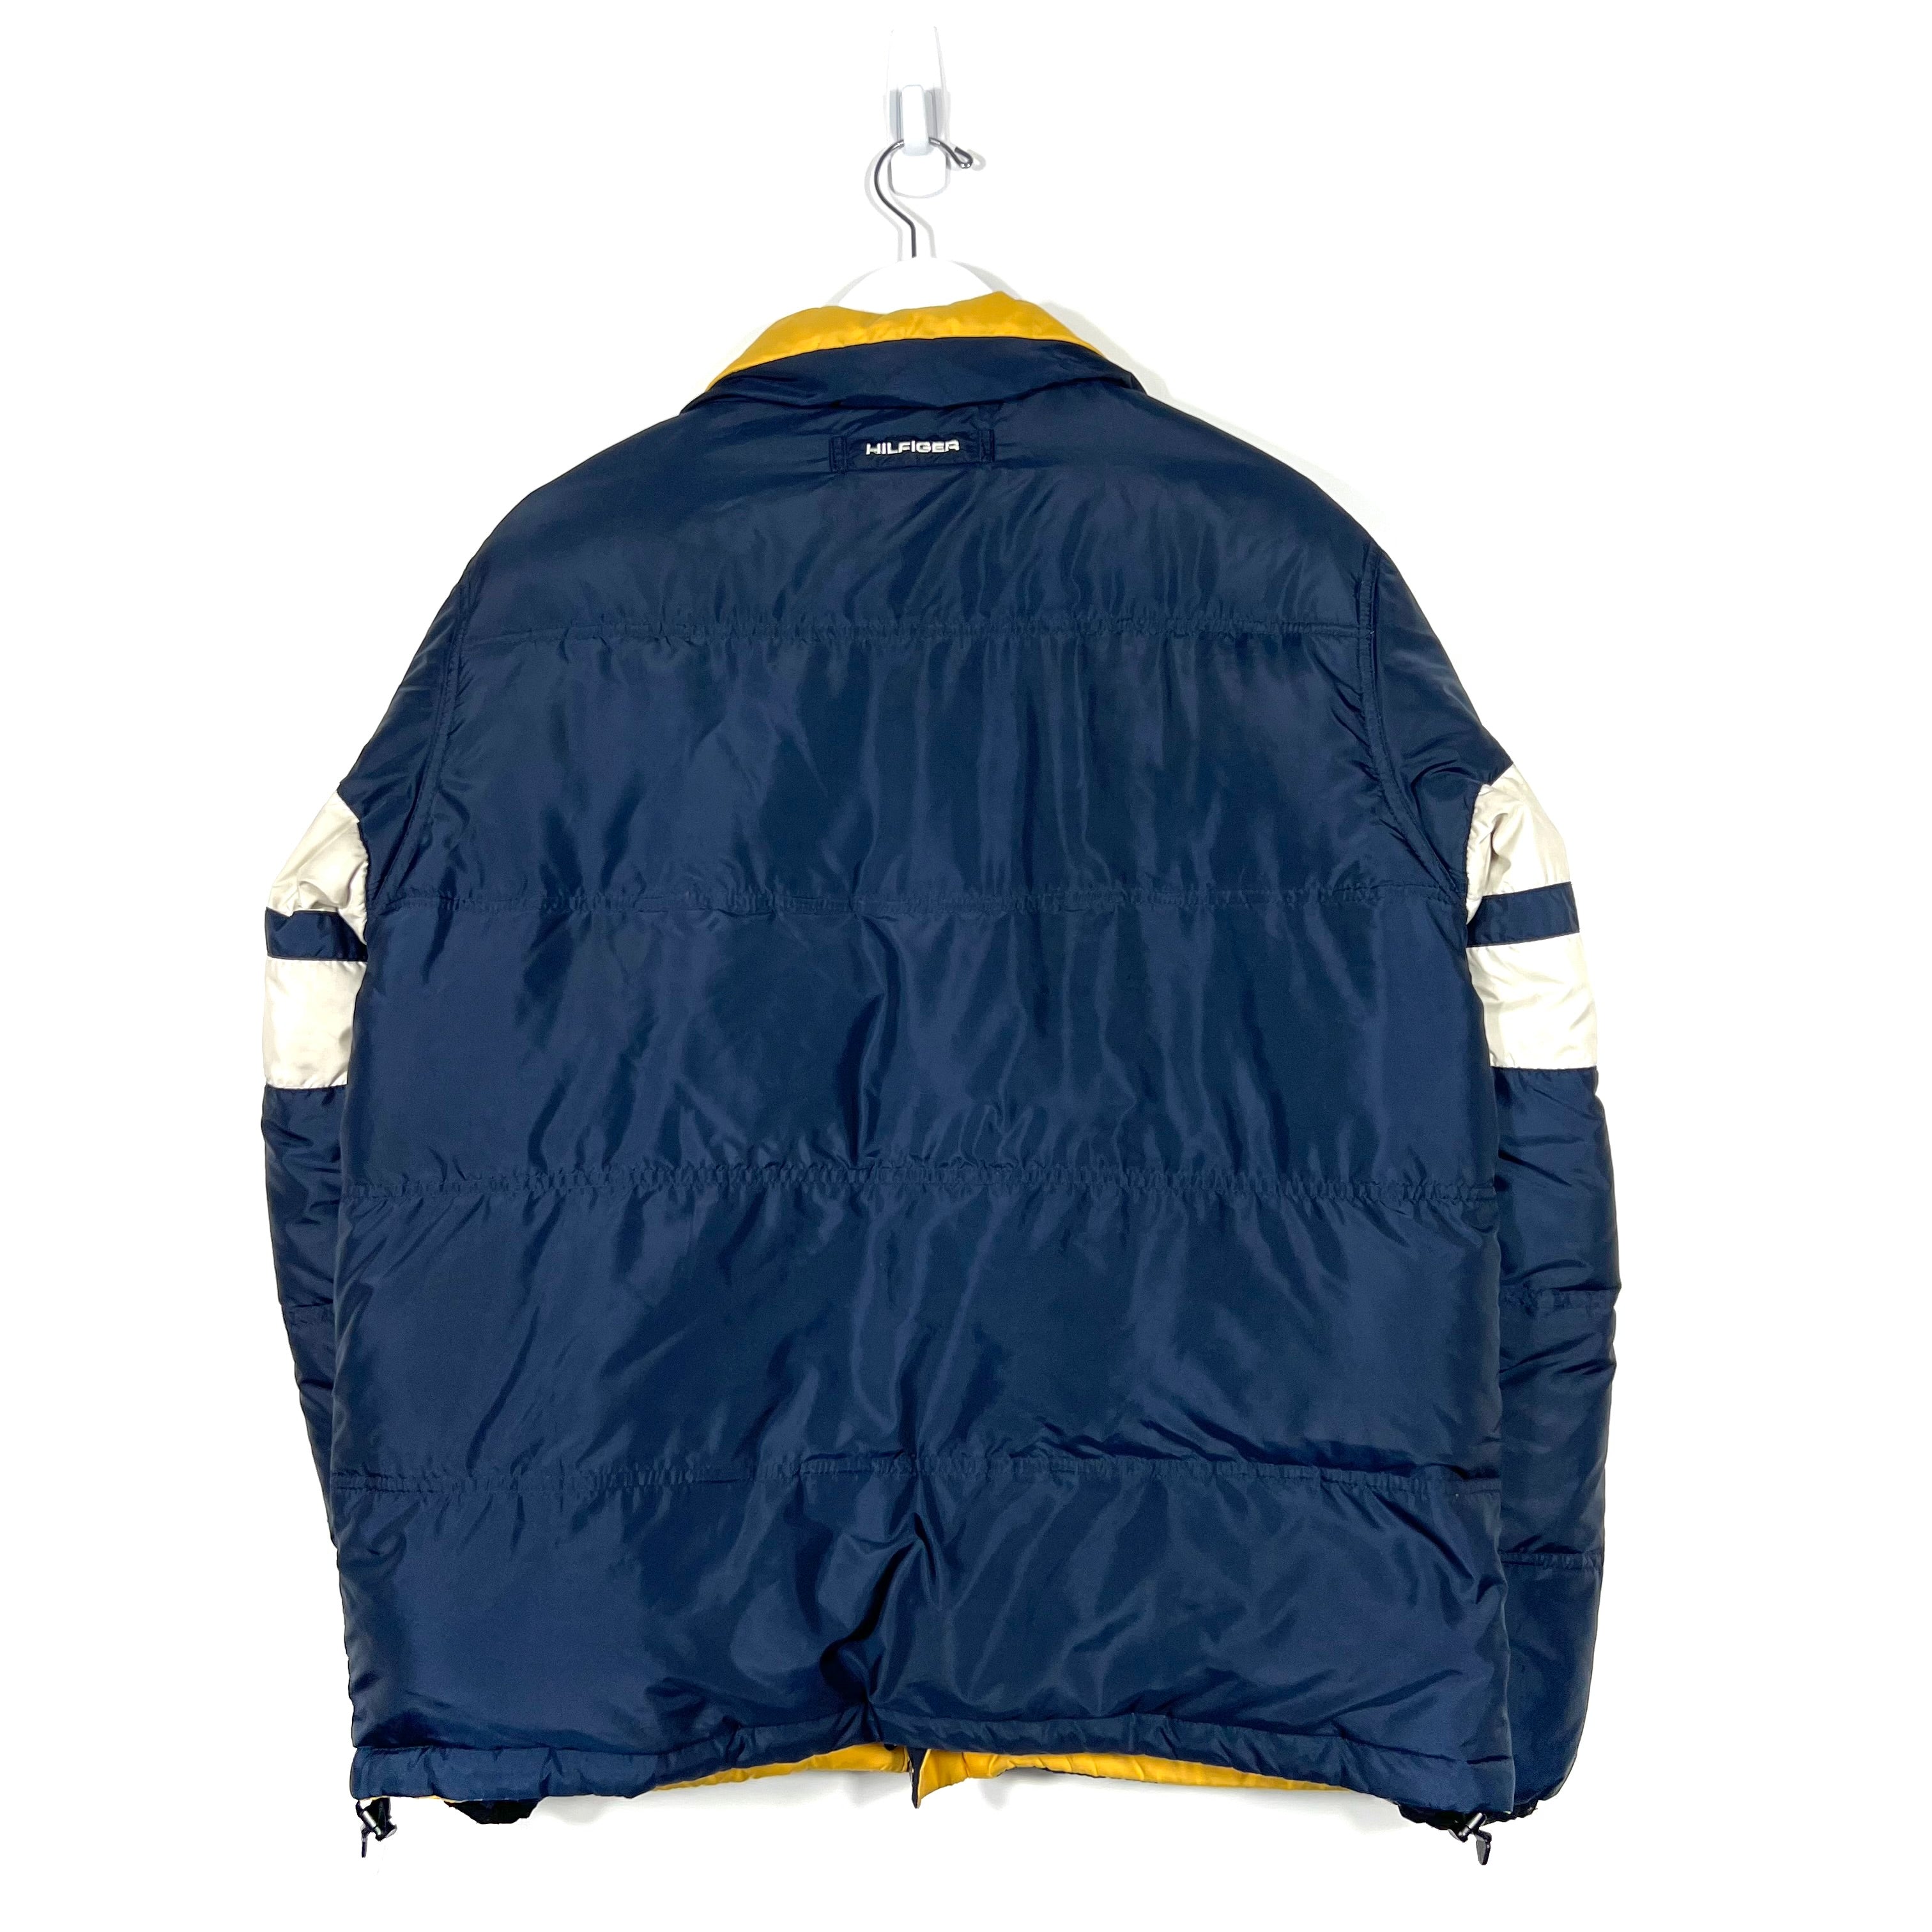 Tommy Hilfiger Reversible Insulated Jacket - Men's Medium